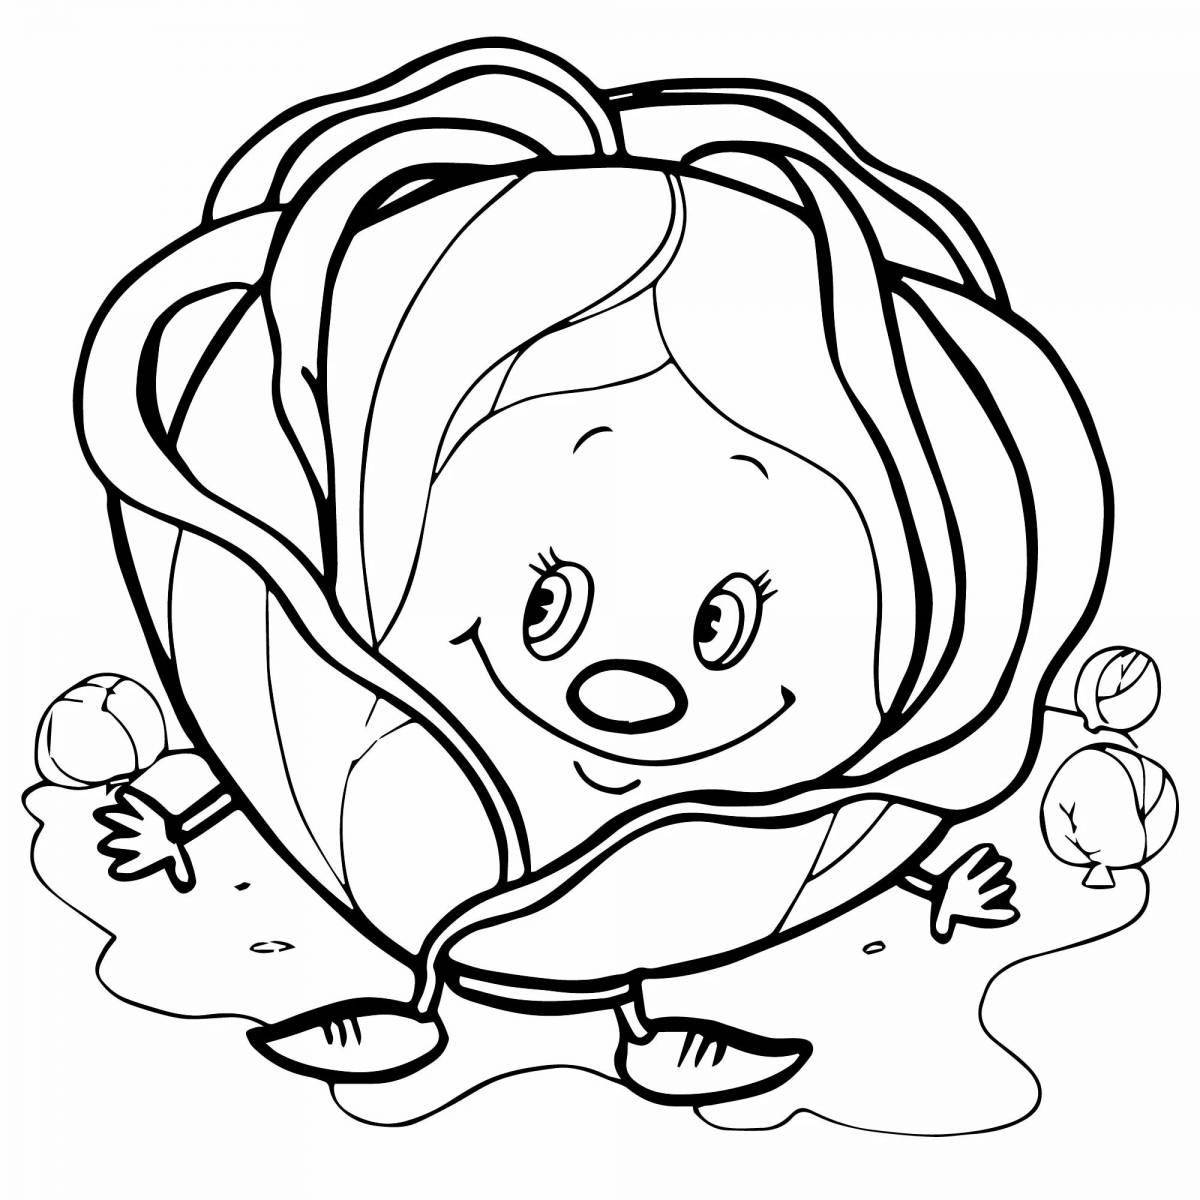 Joyful cabbage drawing for kids